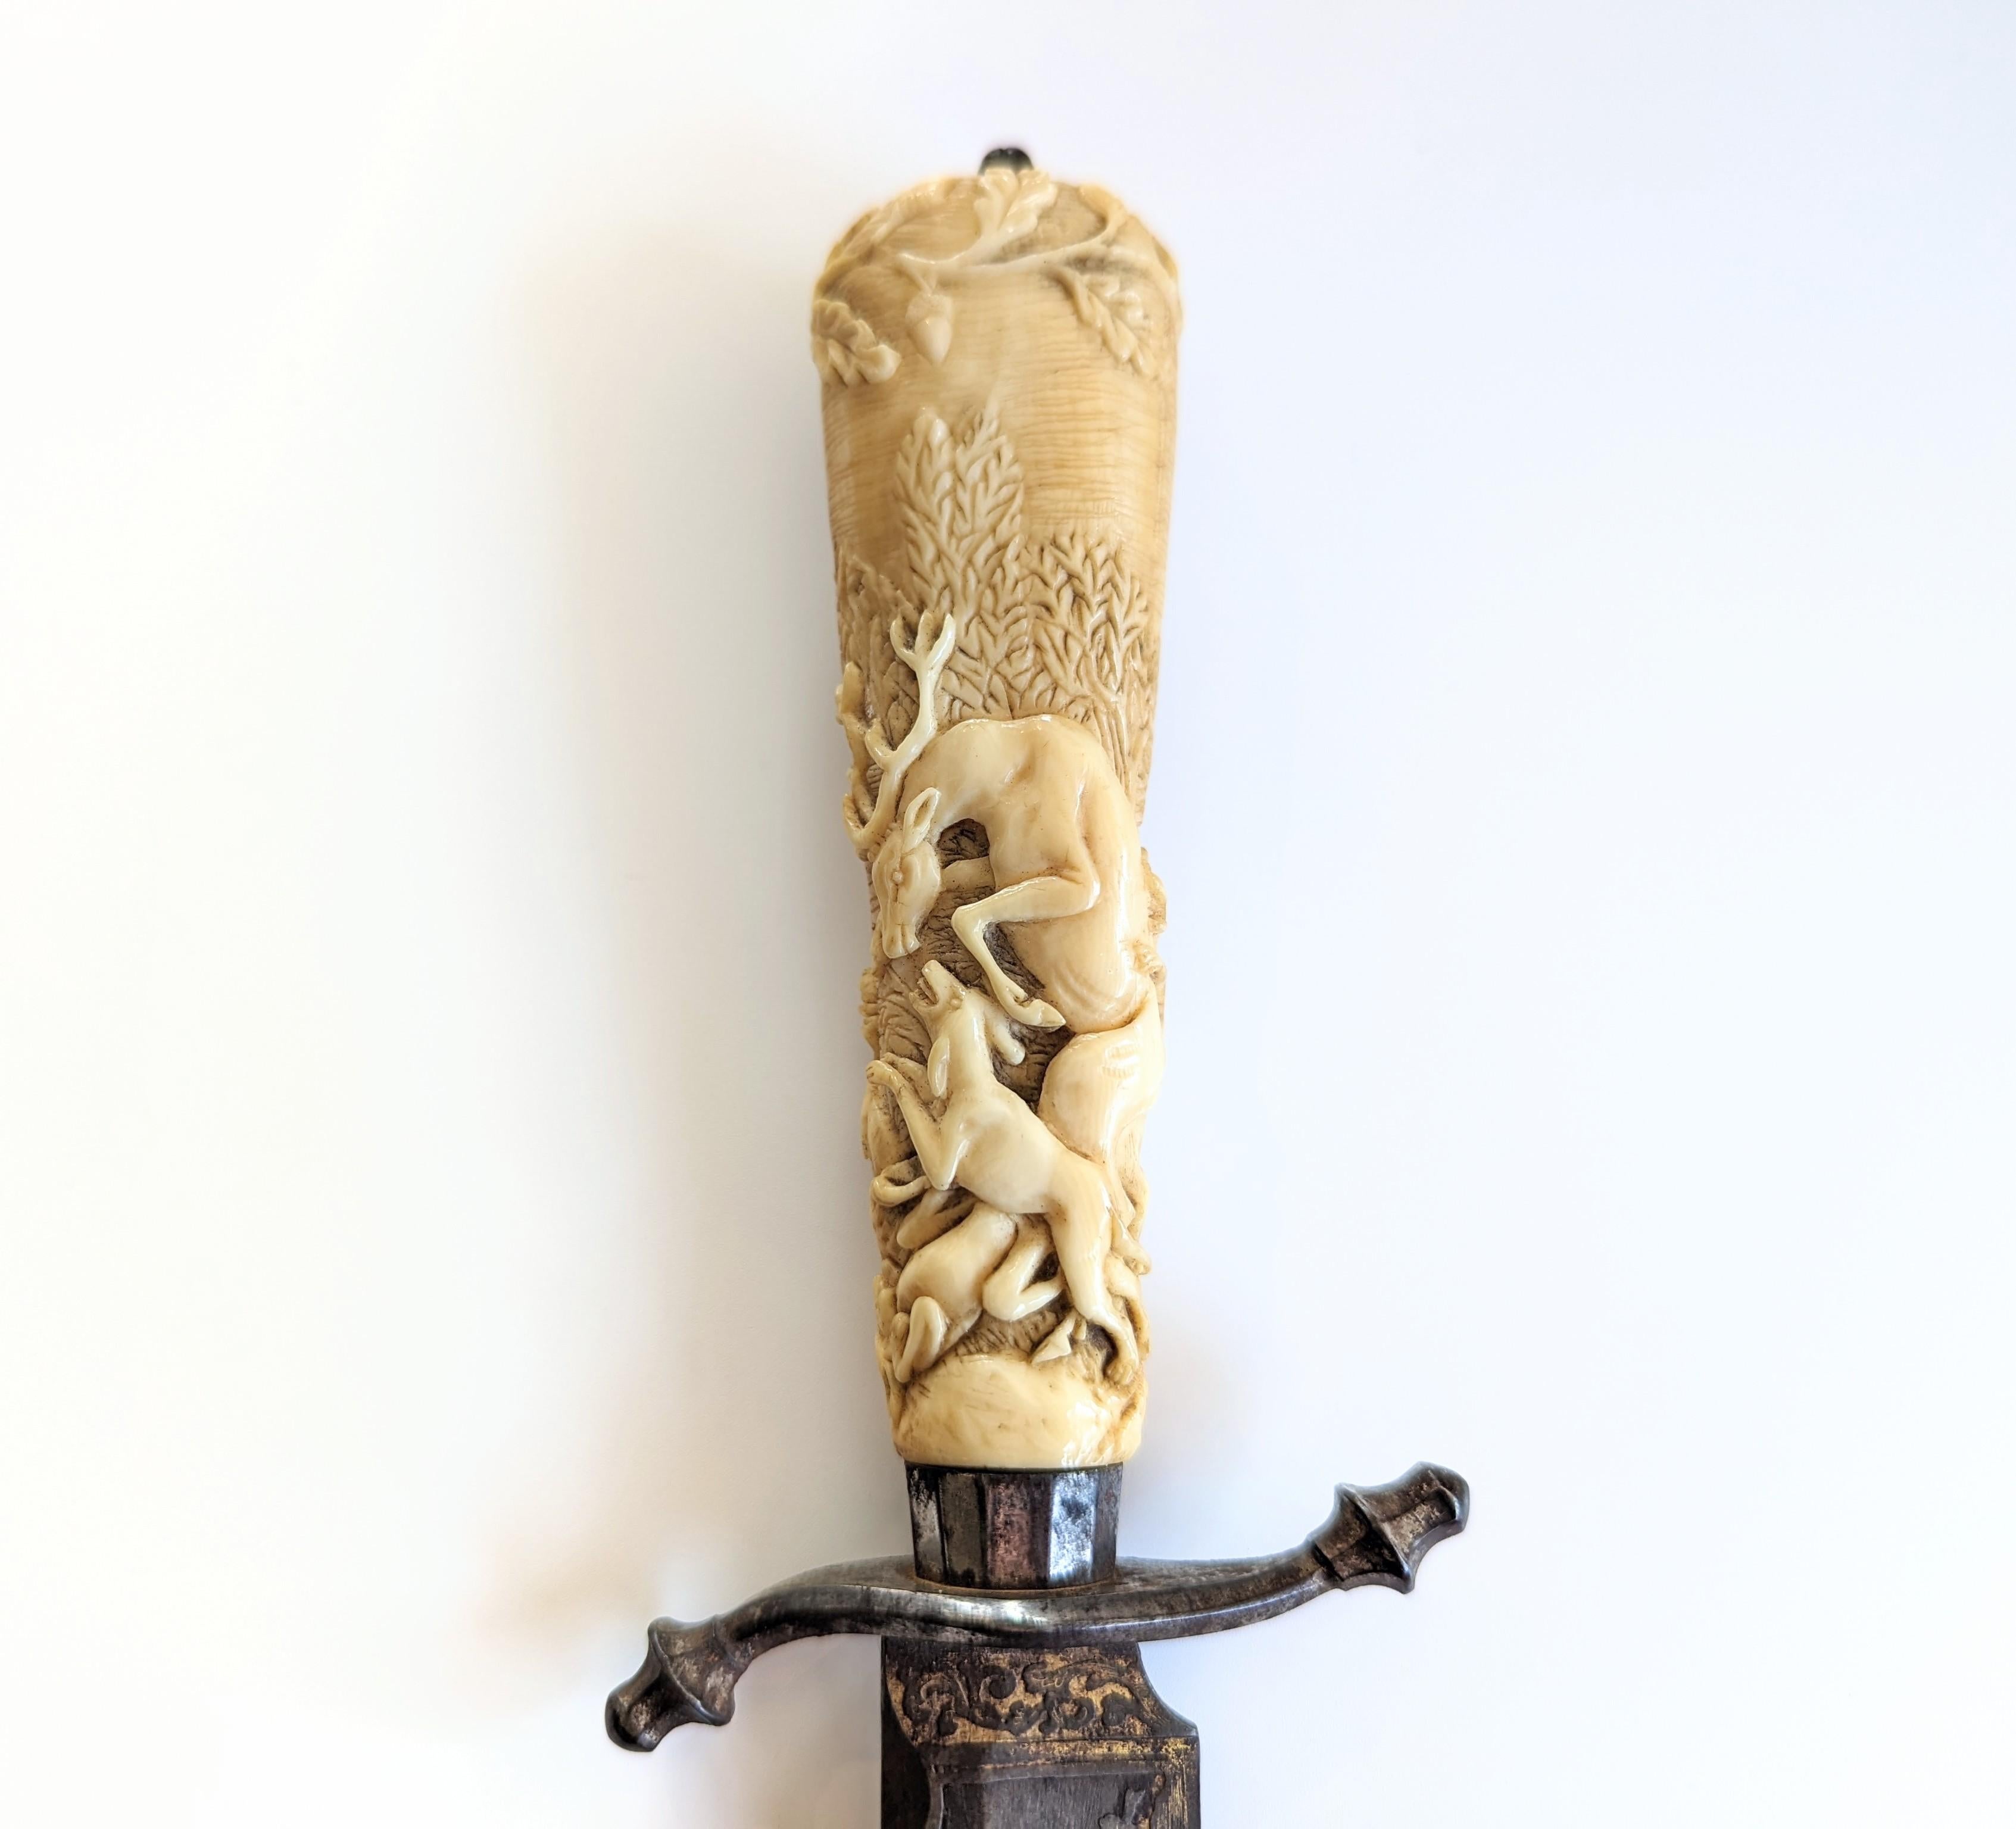 18th century hunting knife